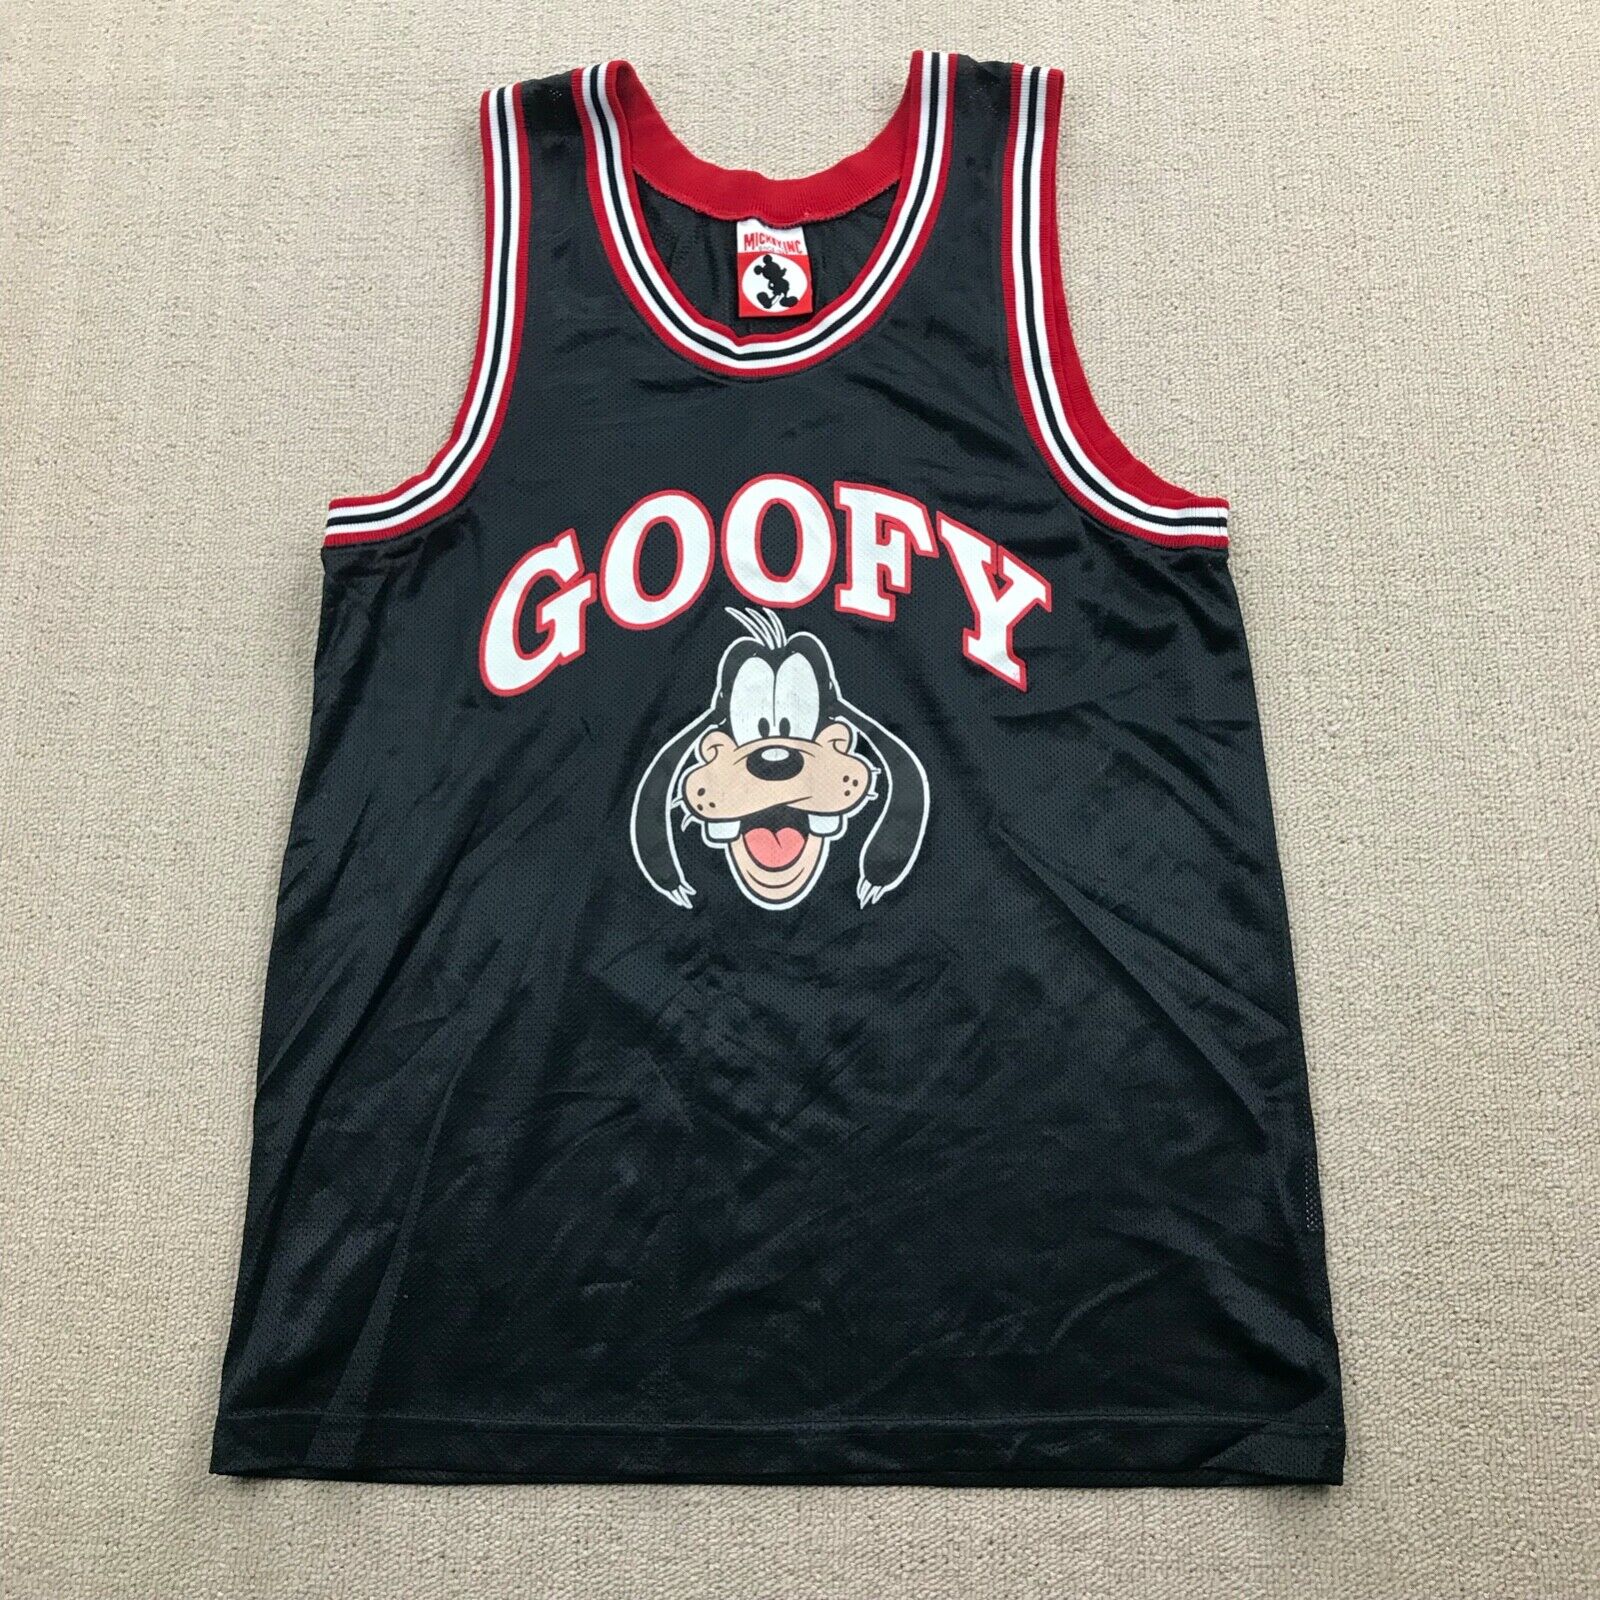 VINTAGE 90s Disney Basketball Jersey Mens Medium Black Red Goofy 90s USA